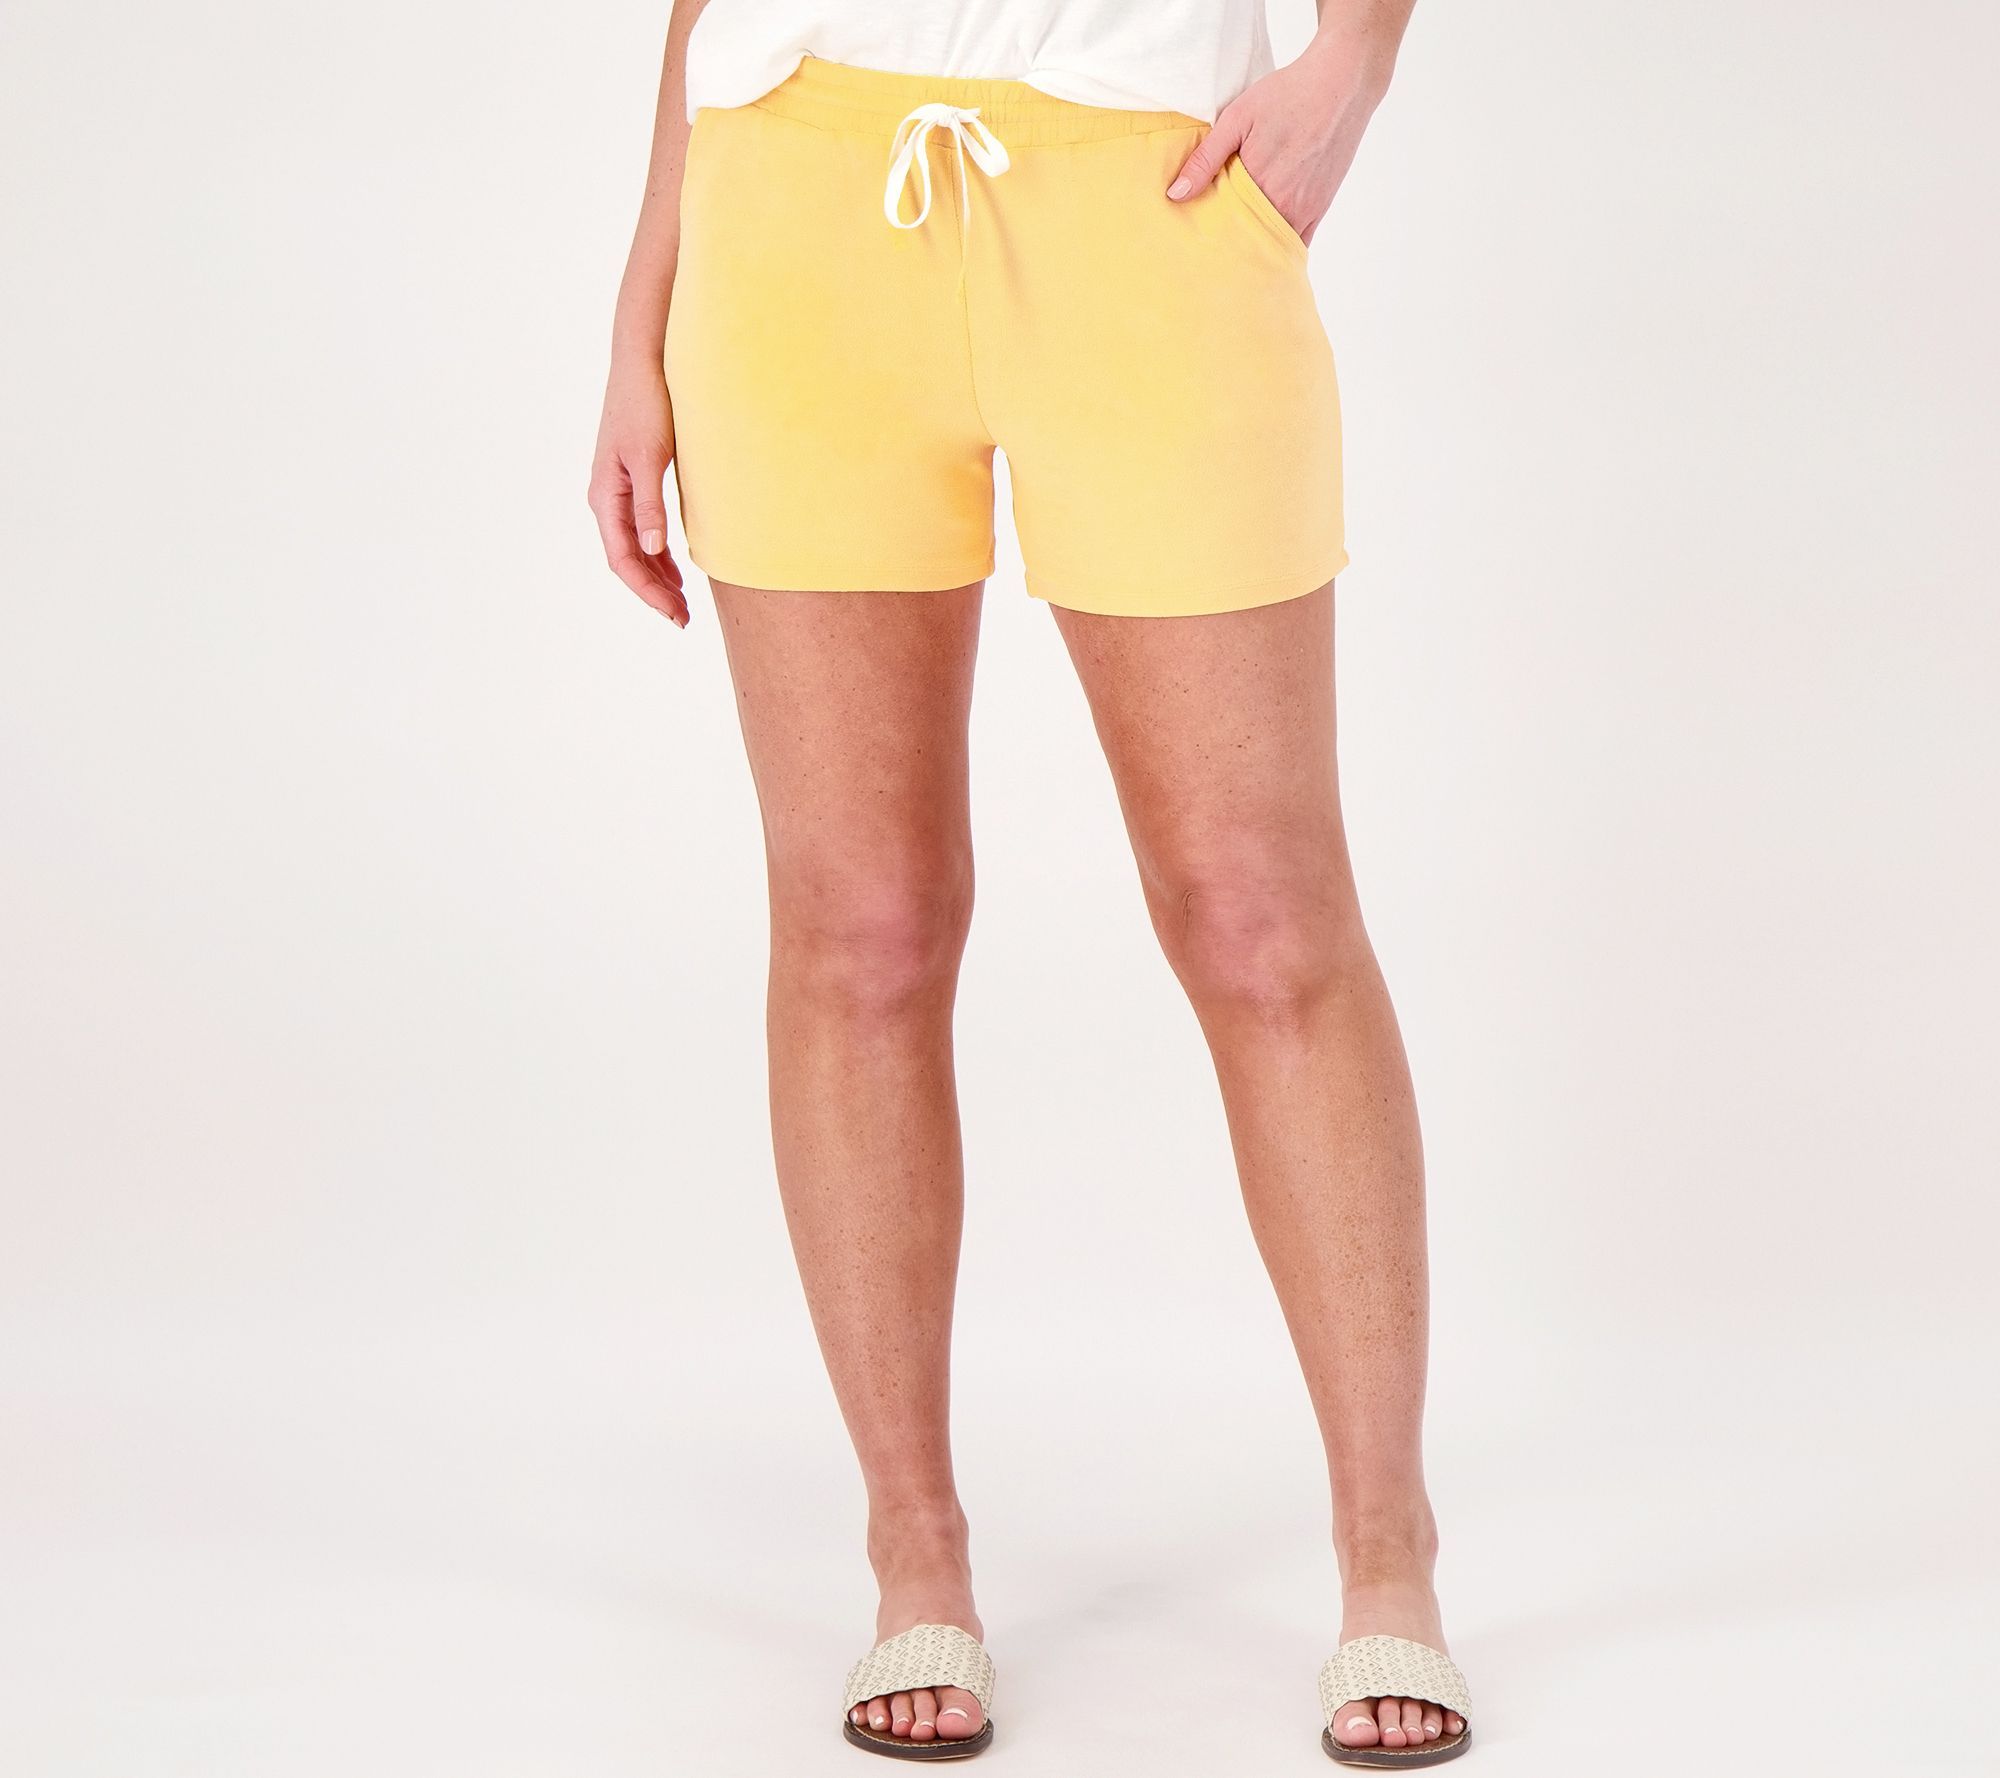 Candace Cameron Bure Women's Petite Shorts PM Terry Cloth Beach Yellow A488222